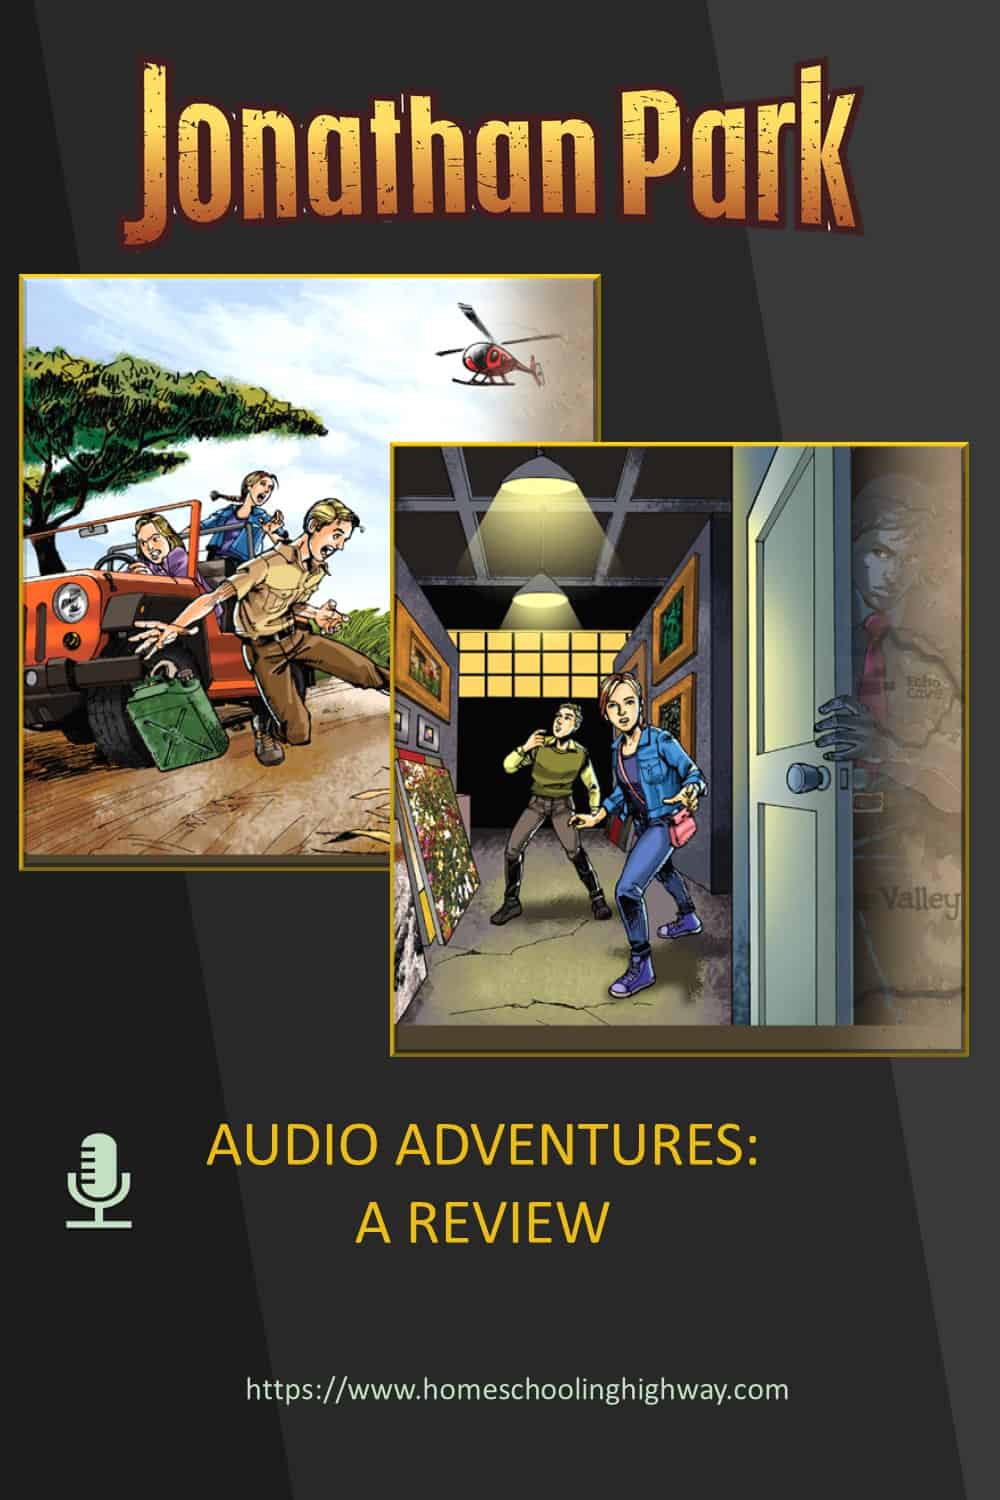 Jonathan Park Audio Adventures. Reviewed by Homeschooling Highway